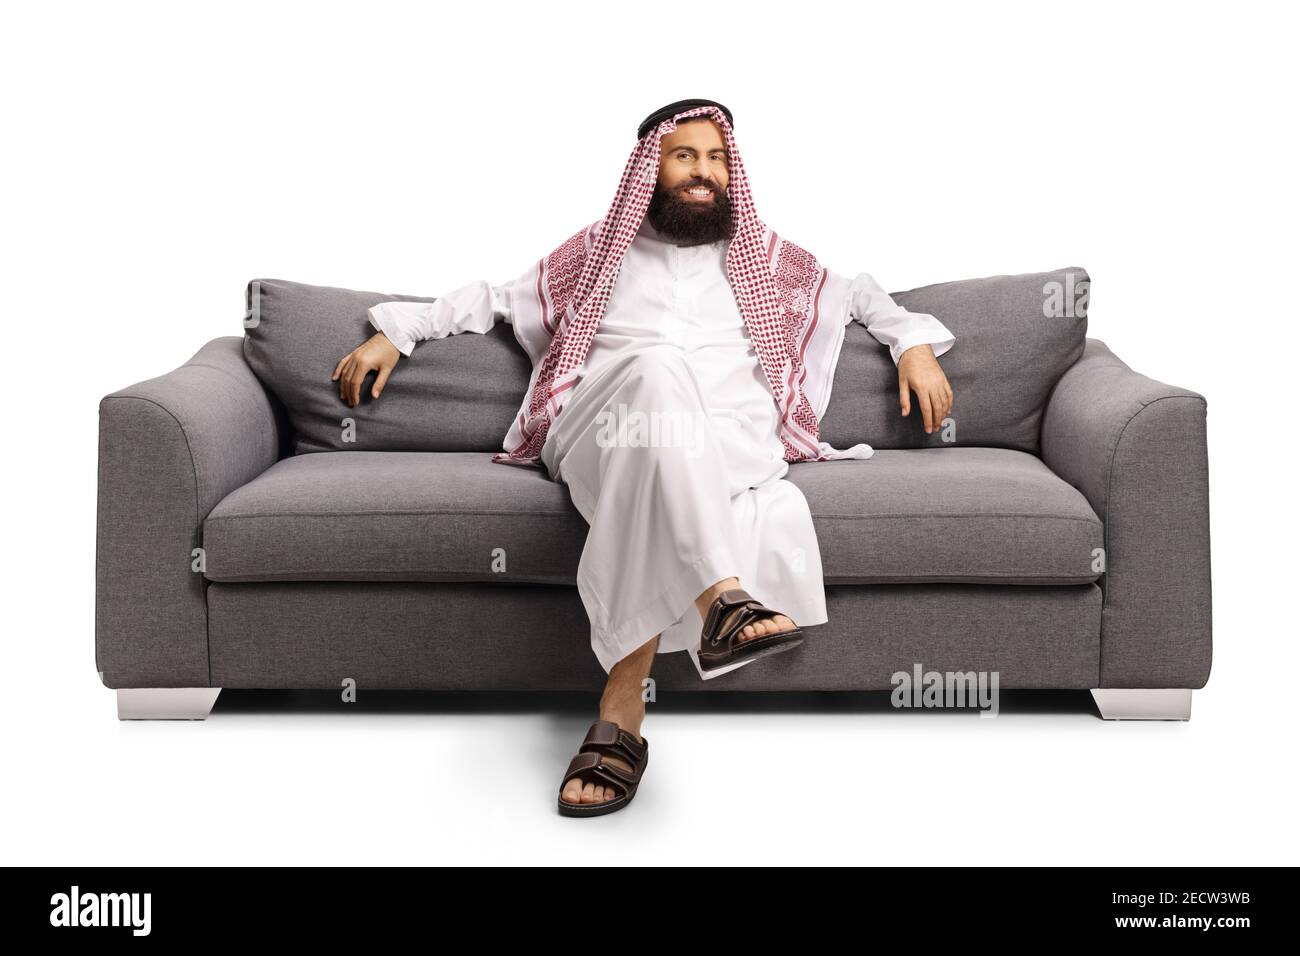 Saudi arab man resting on a gray sofa isolated on white background Stock Photo